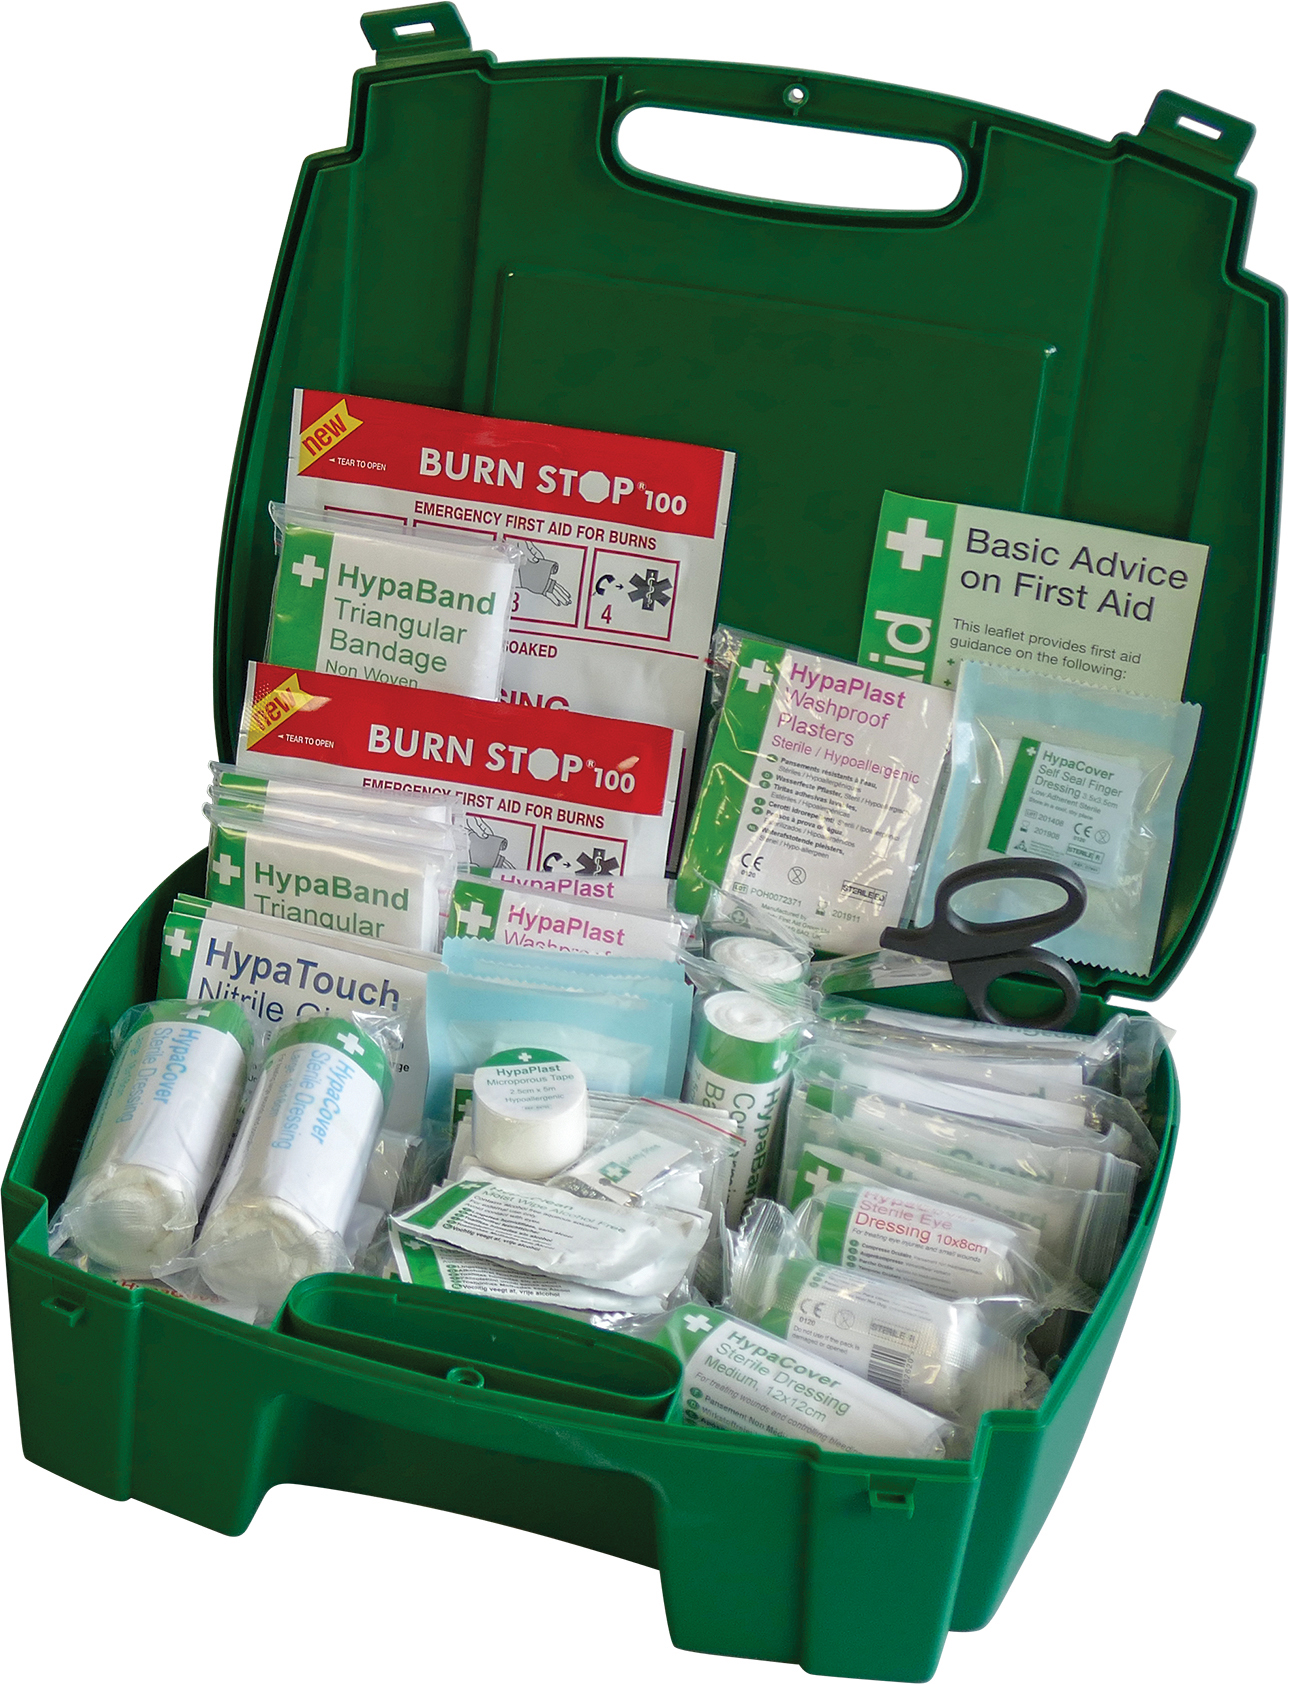 Medium Workplace First Aid Kit in Green Aura Box